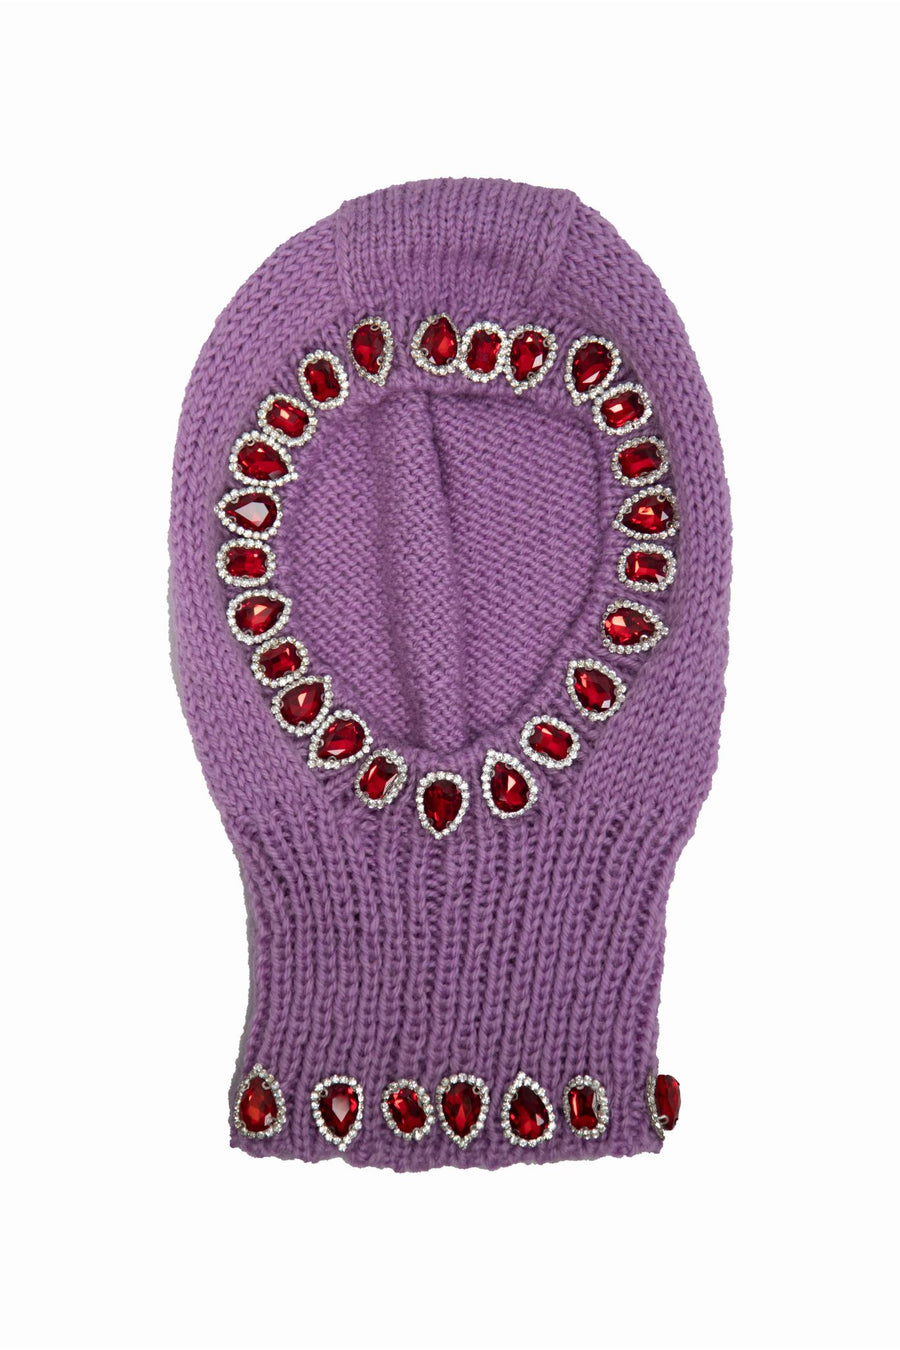 Crystal Hand Knitted Balaclava